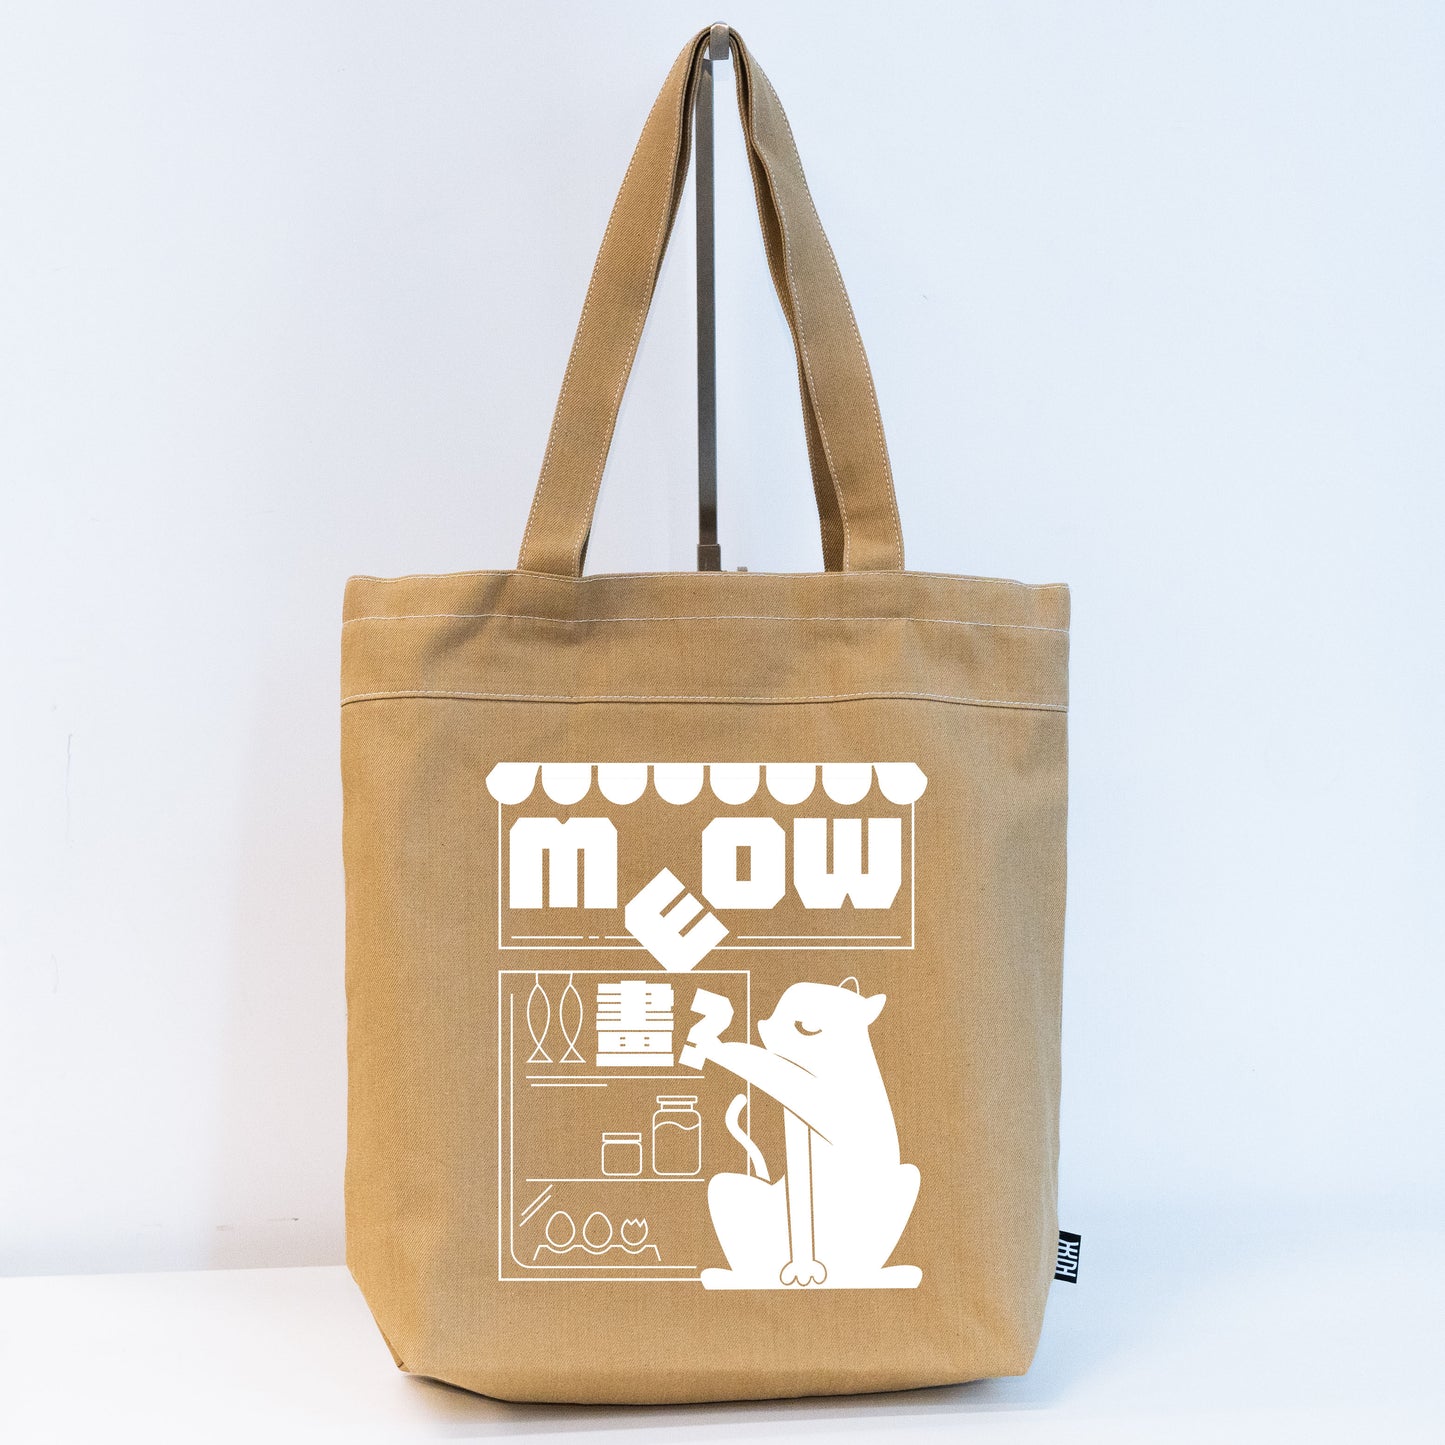 "Fresh Mart" Tote Bag Designed by Wong Ho